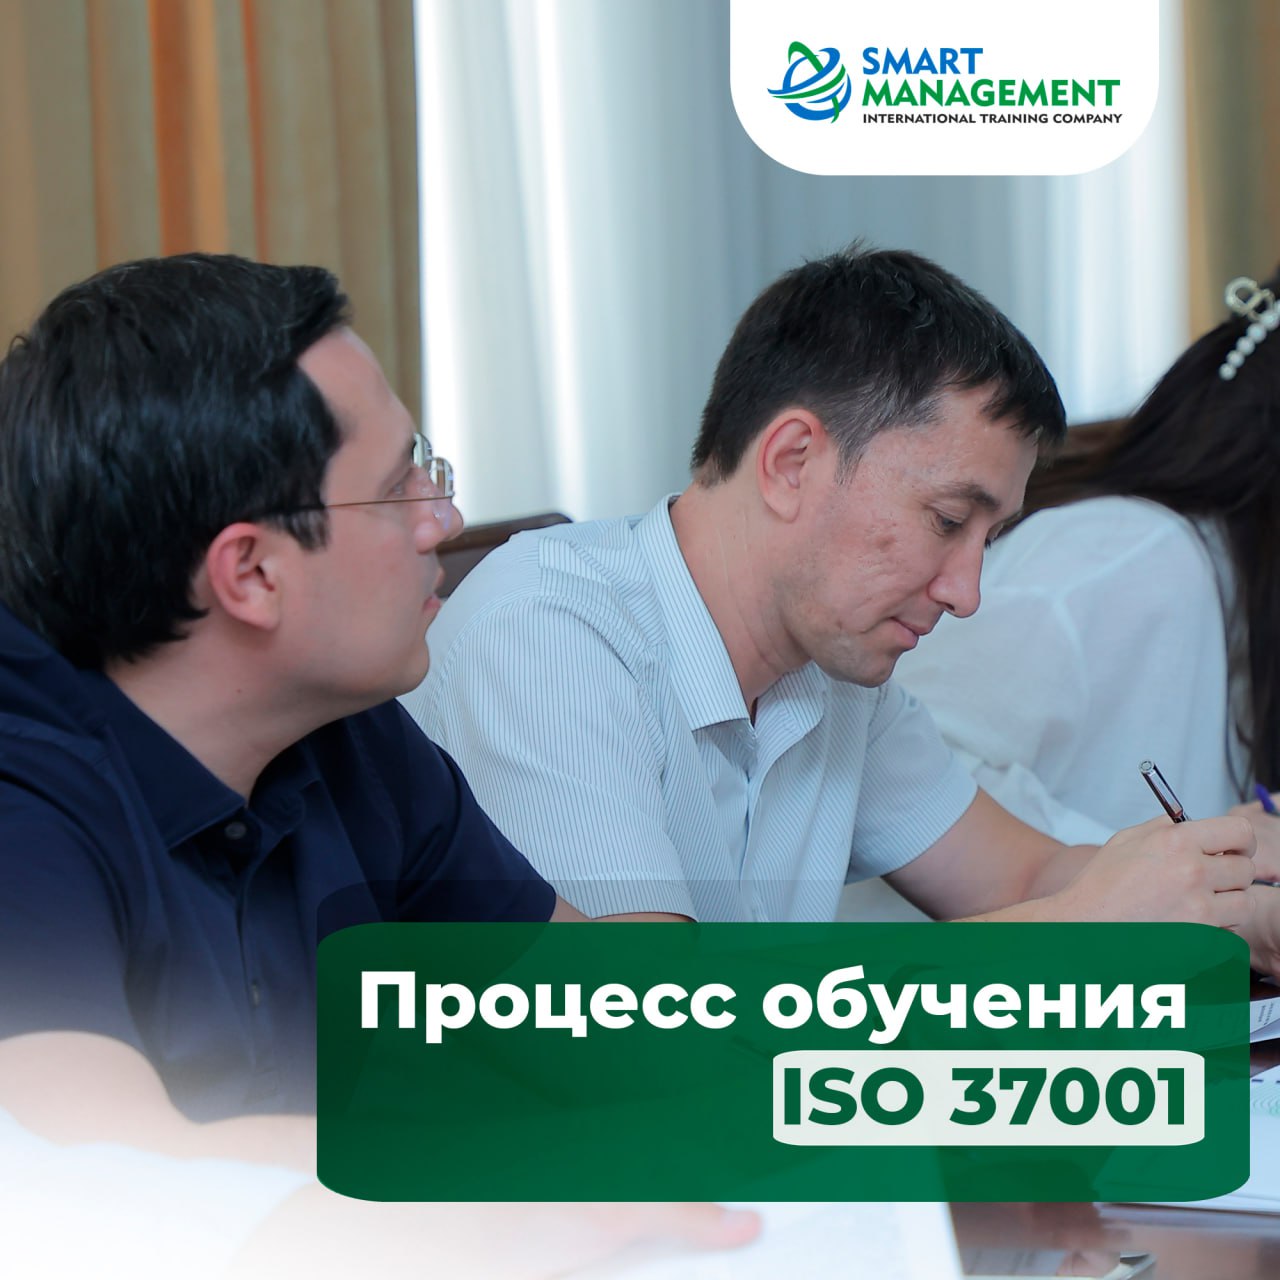 Делимся яркими моментами прошедших обучений для специалистов Министерства занятости и сокращения бедности Республики Узбекистан по международному стандарту ISO 37001.